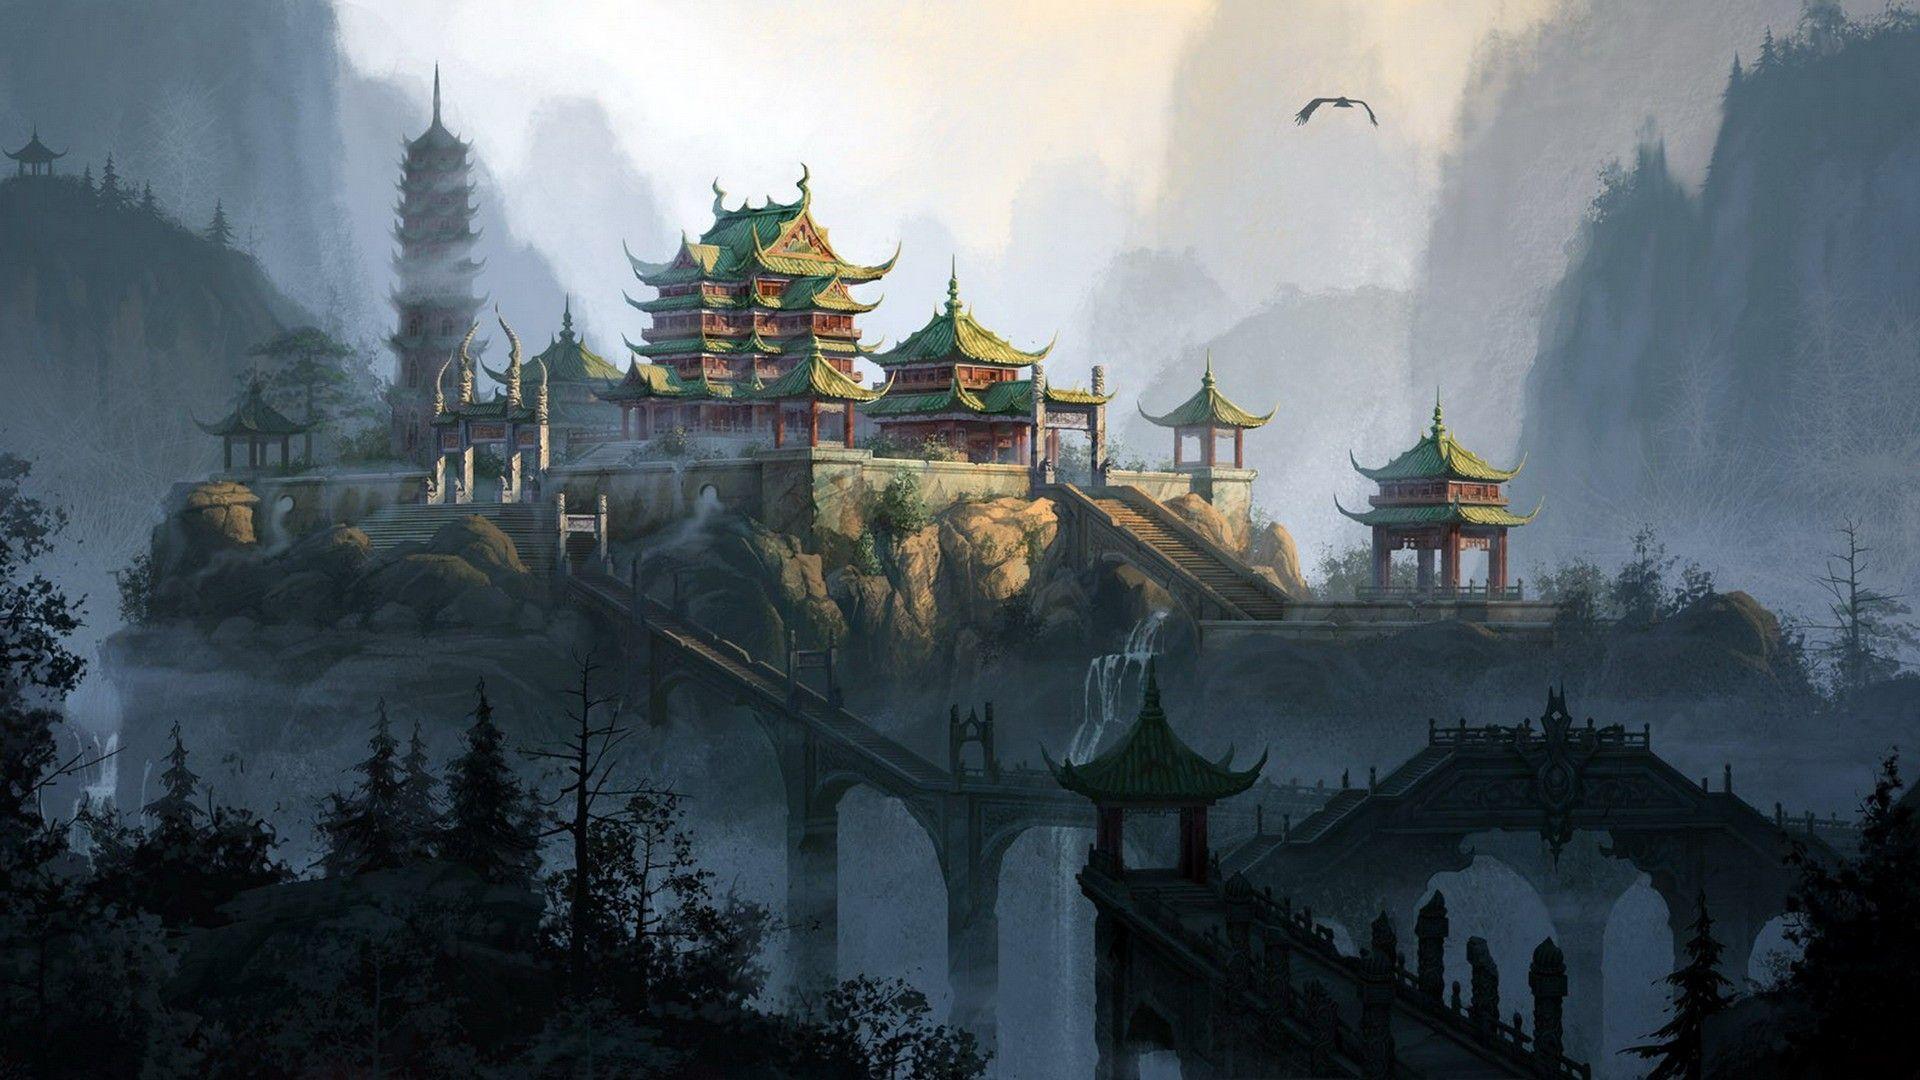 chinese art wallpaper